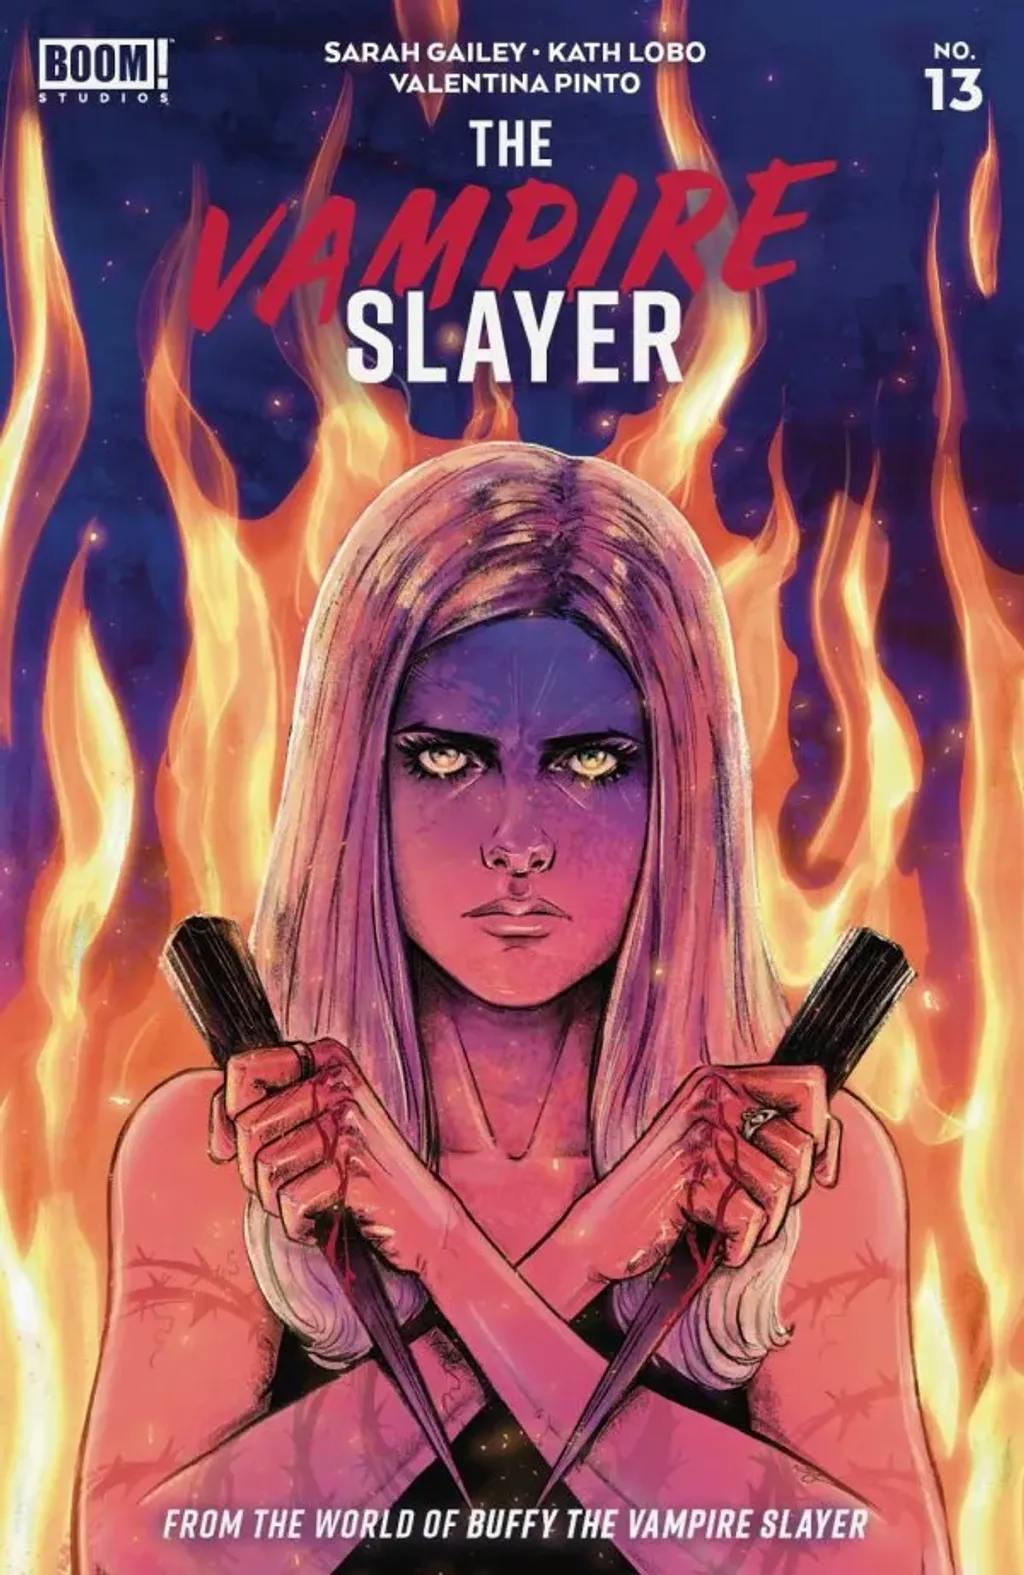 The Vampire Slayer #13 By Sarah Gailey, Kath Lobo, and Valentina Pino